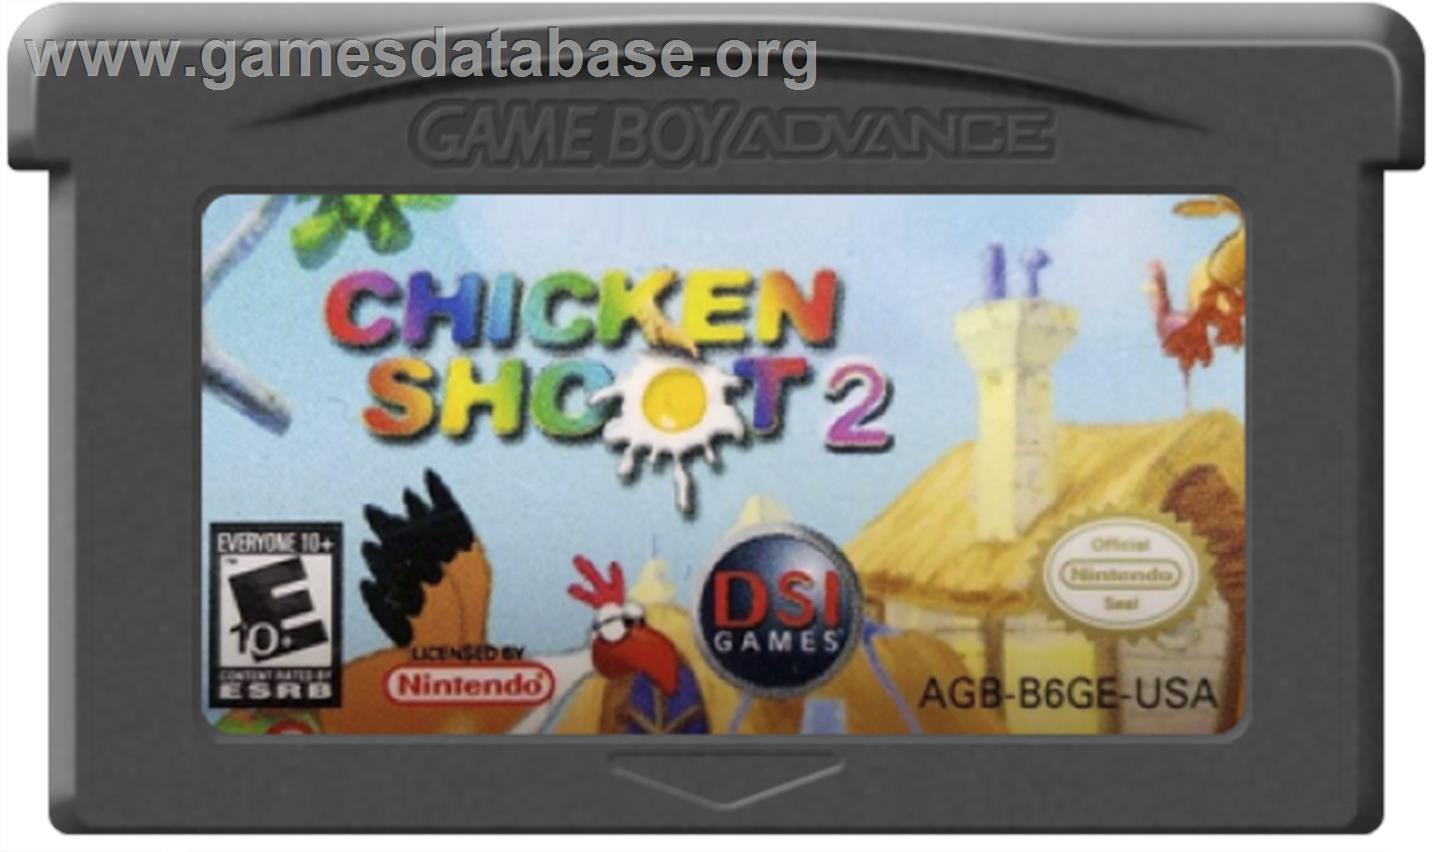 Chicken Shoot 2 - Nintendo Game Boy Advance - Artwork - Cartridge